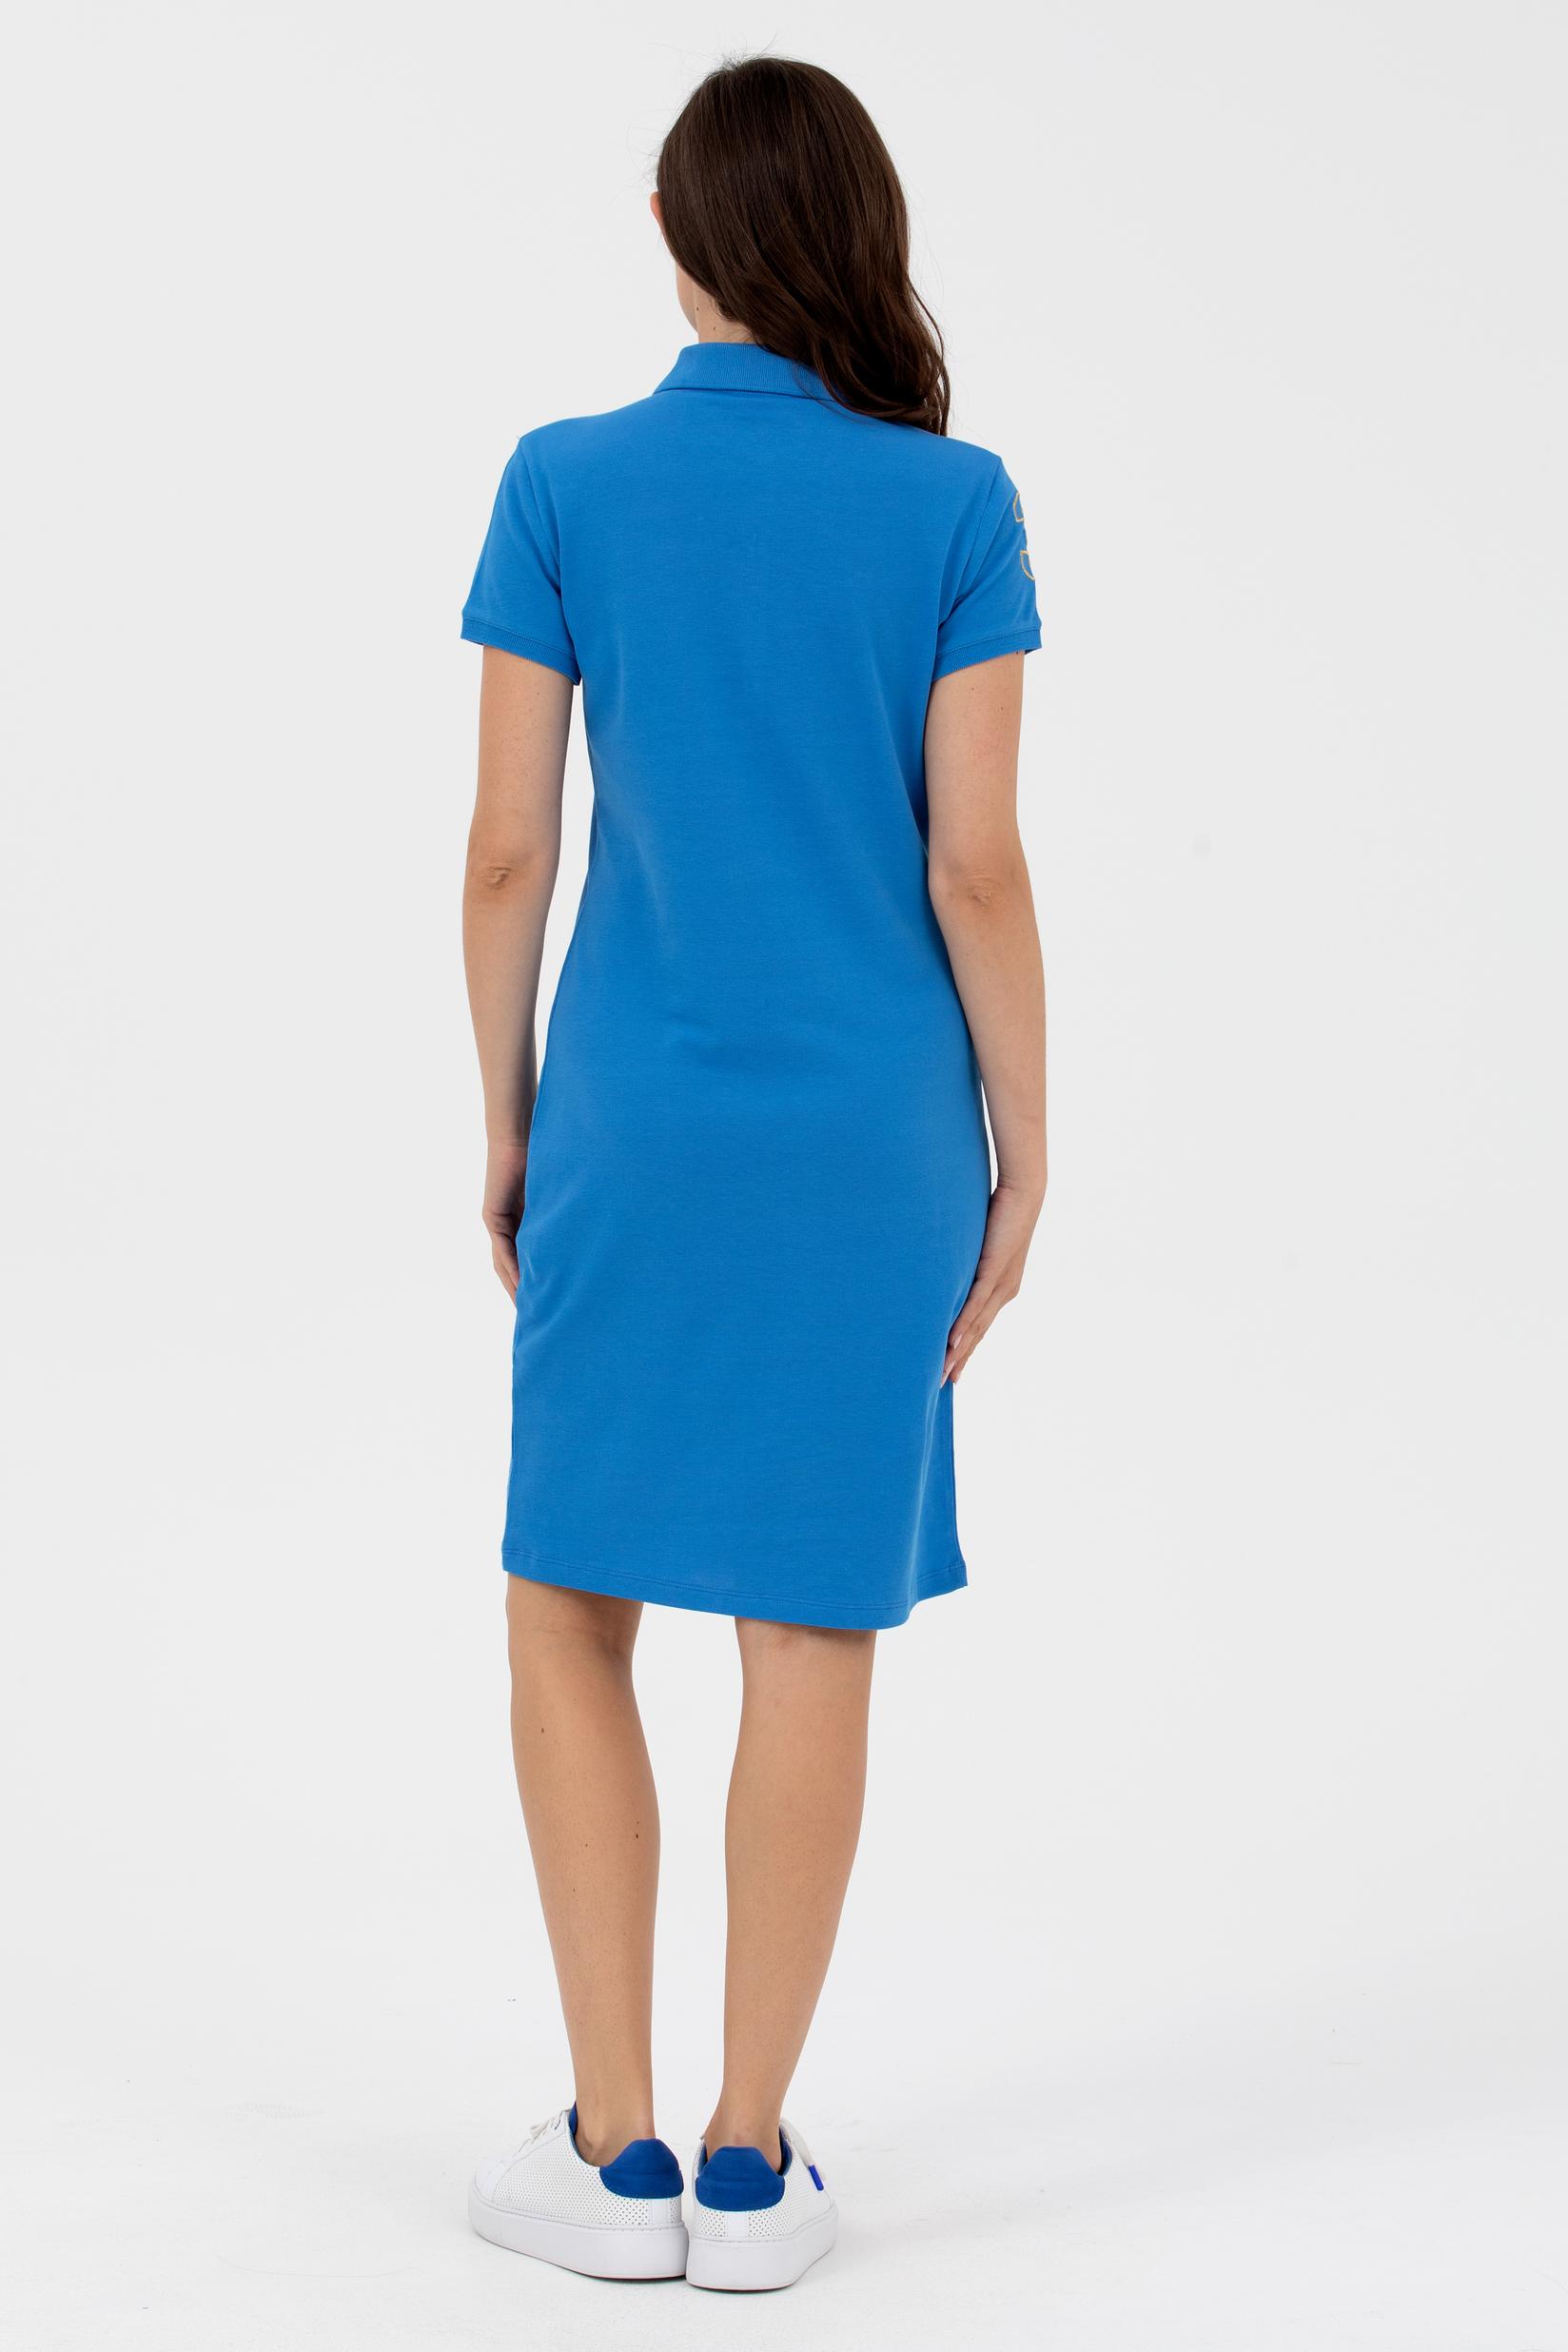 Selected image for U.S. POLO ASSN. Ženska haljina plava